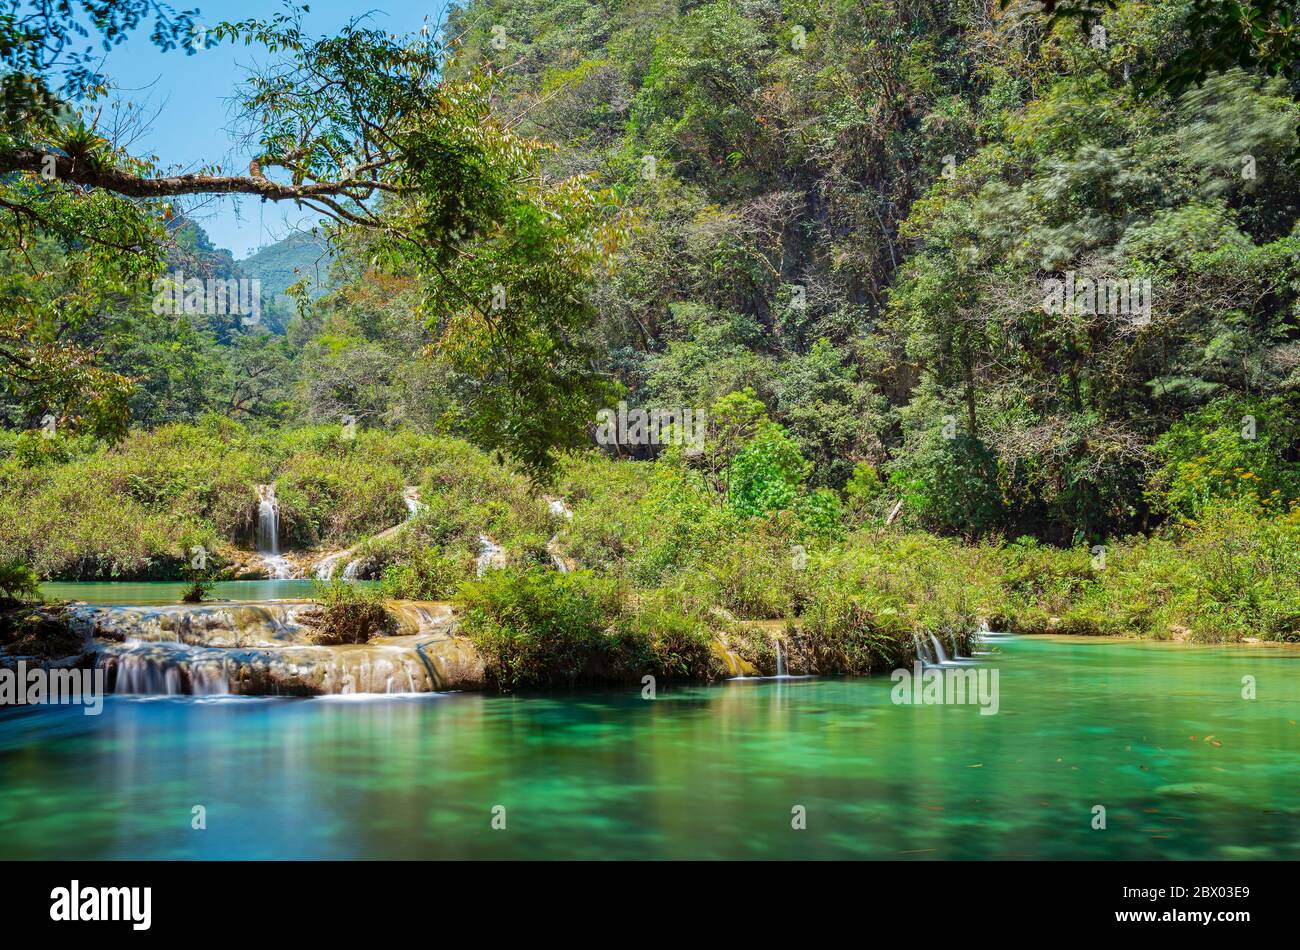 Long exposure photograph of the Semuc Champey Cascades along the Cahabon river, Peten Rainforest, Guatemala. Stock Photo